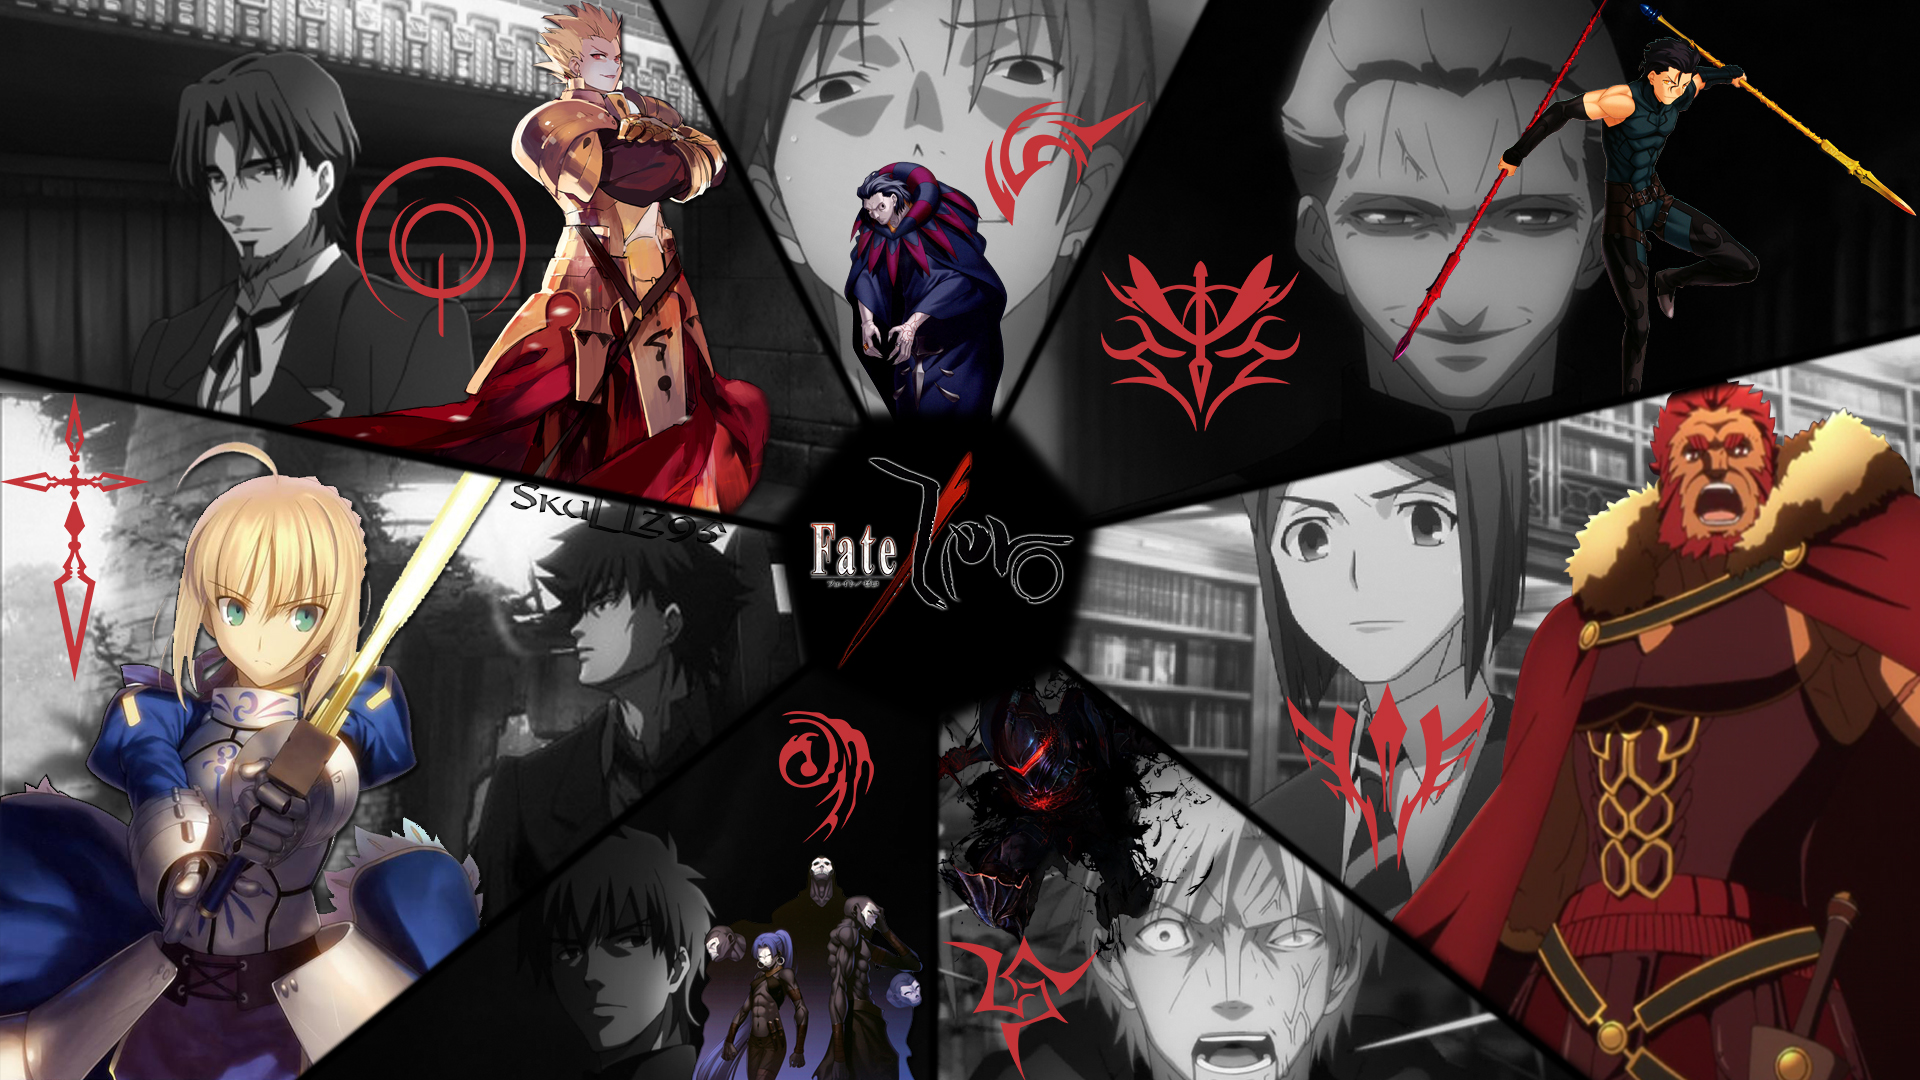 Fate Zero Masters And Servants Wallpaper By Skullz95 On Deviantart